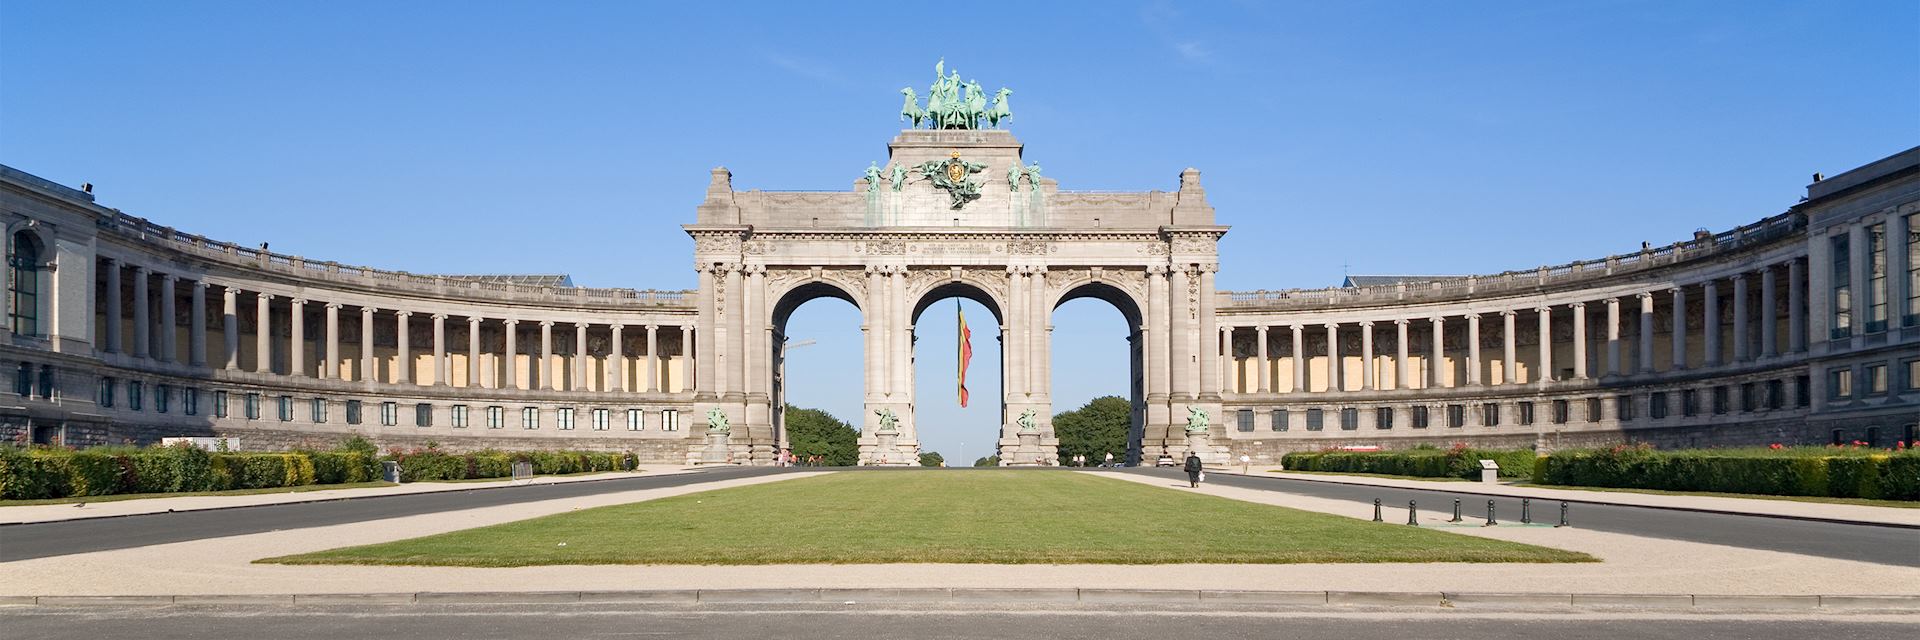 Triumphal Arch, Brussels